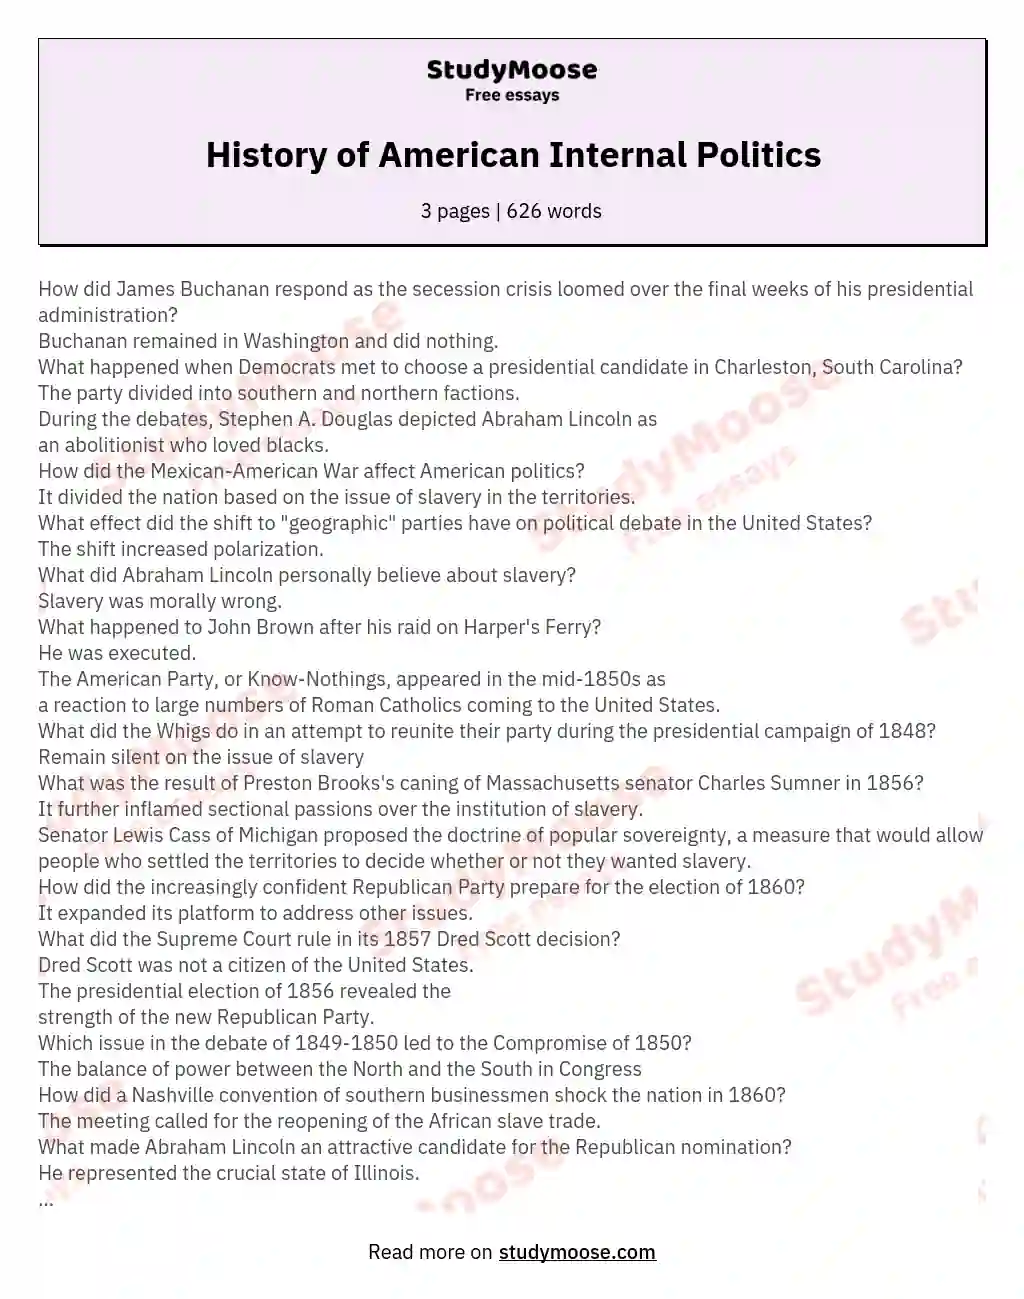 History of American Internal Politics essay